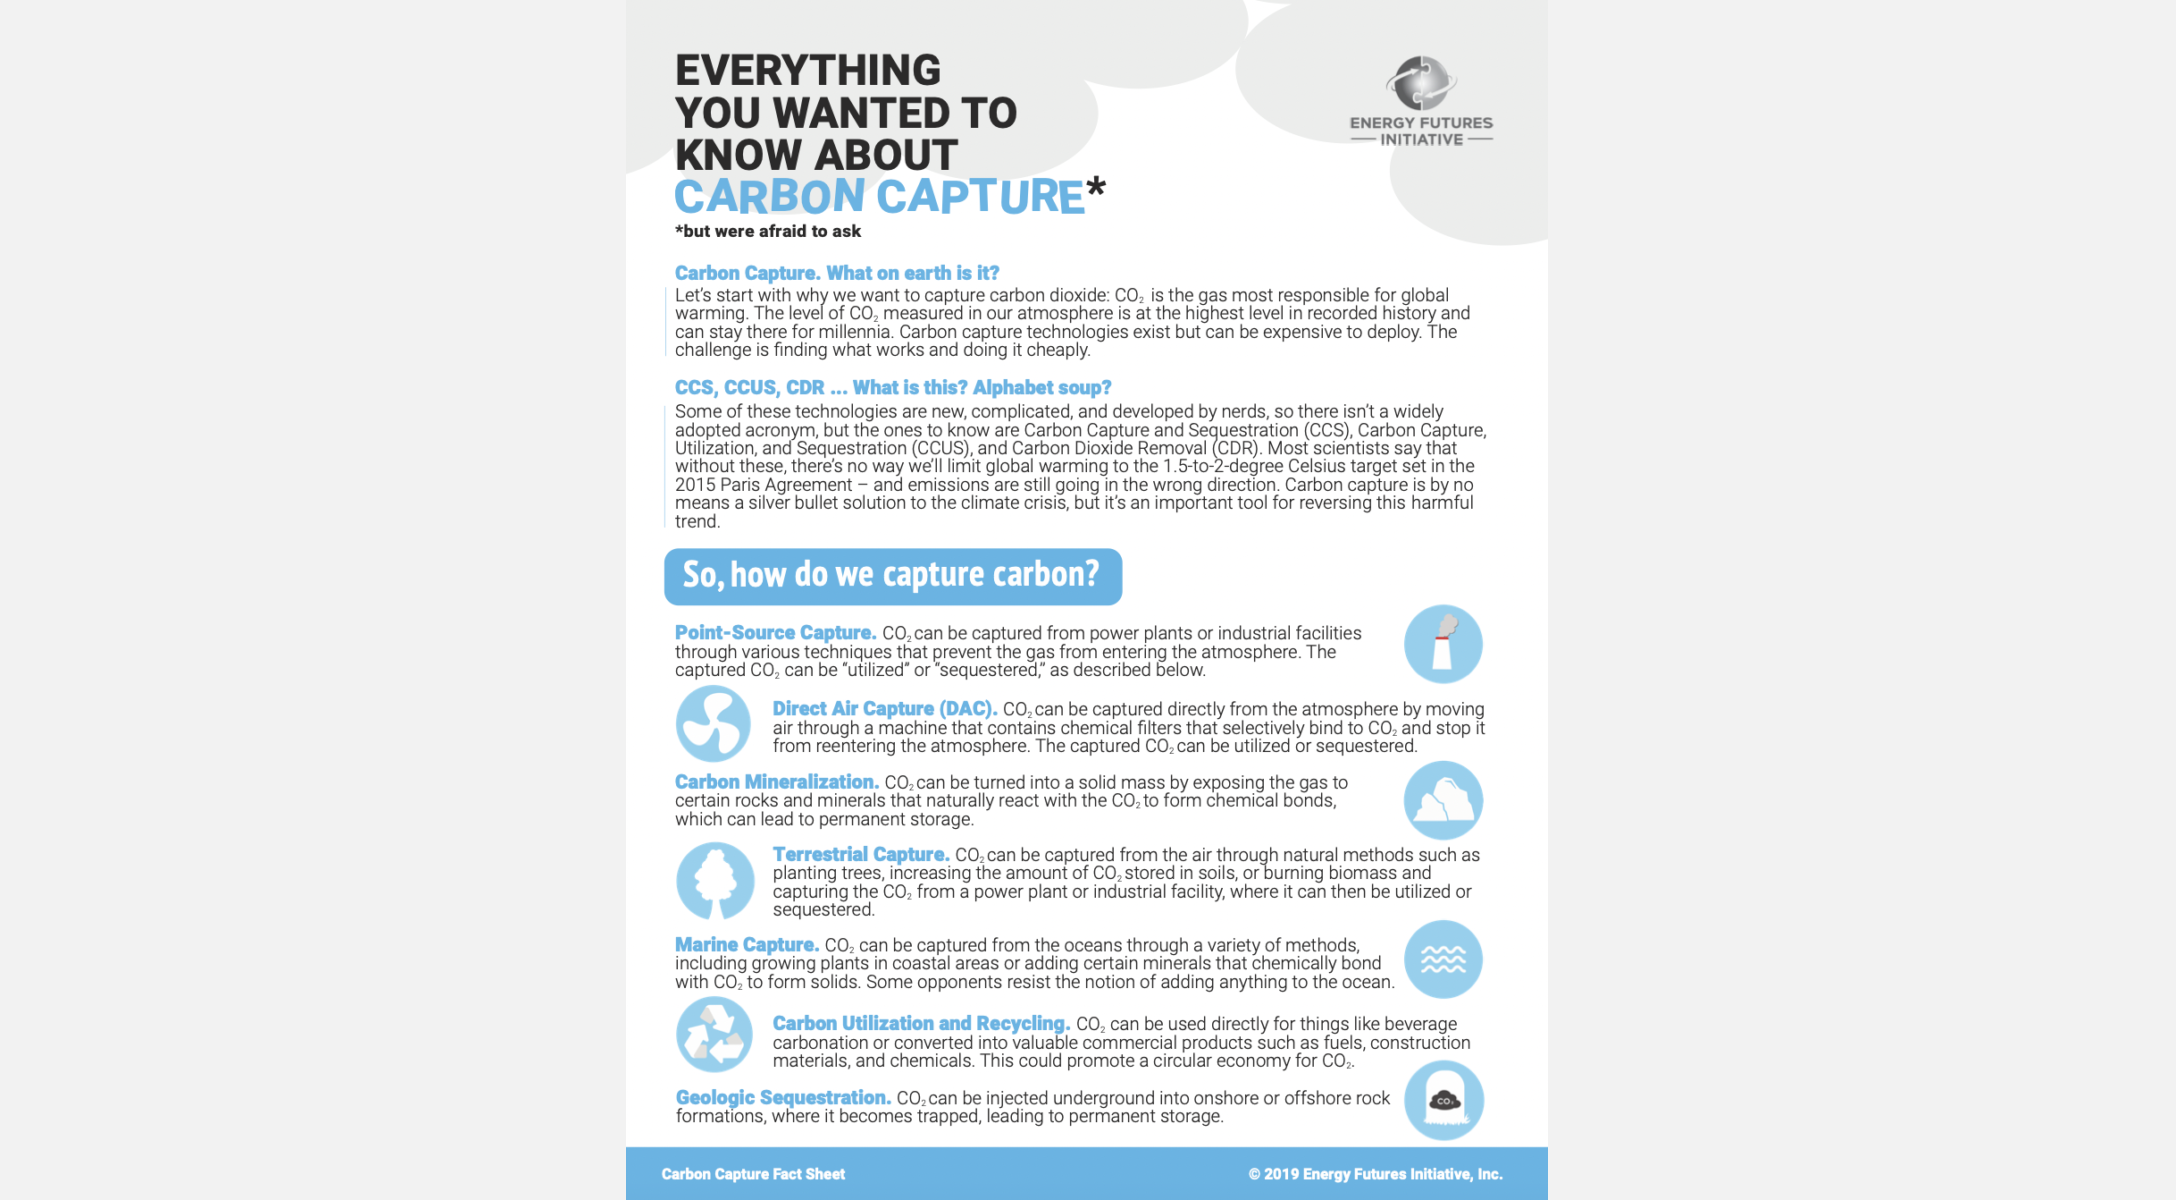 Image of Carbon Capture factsheet.